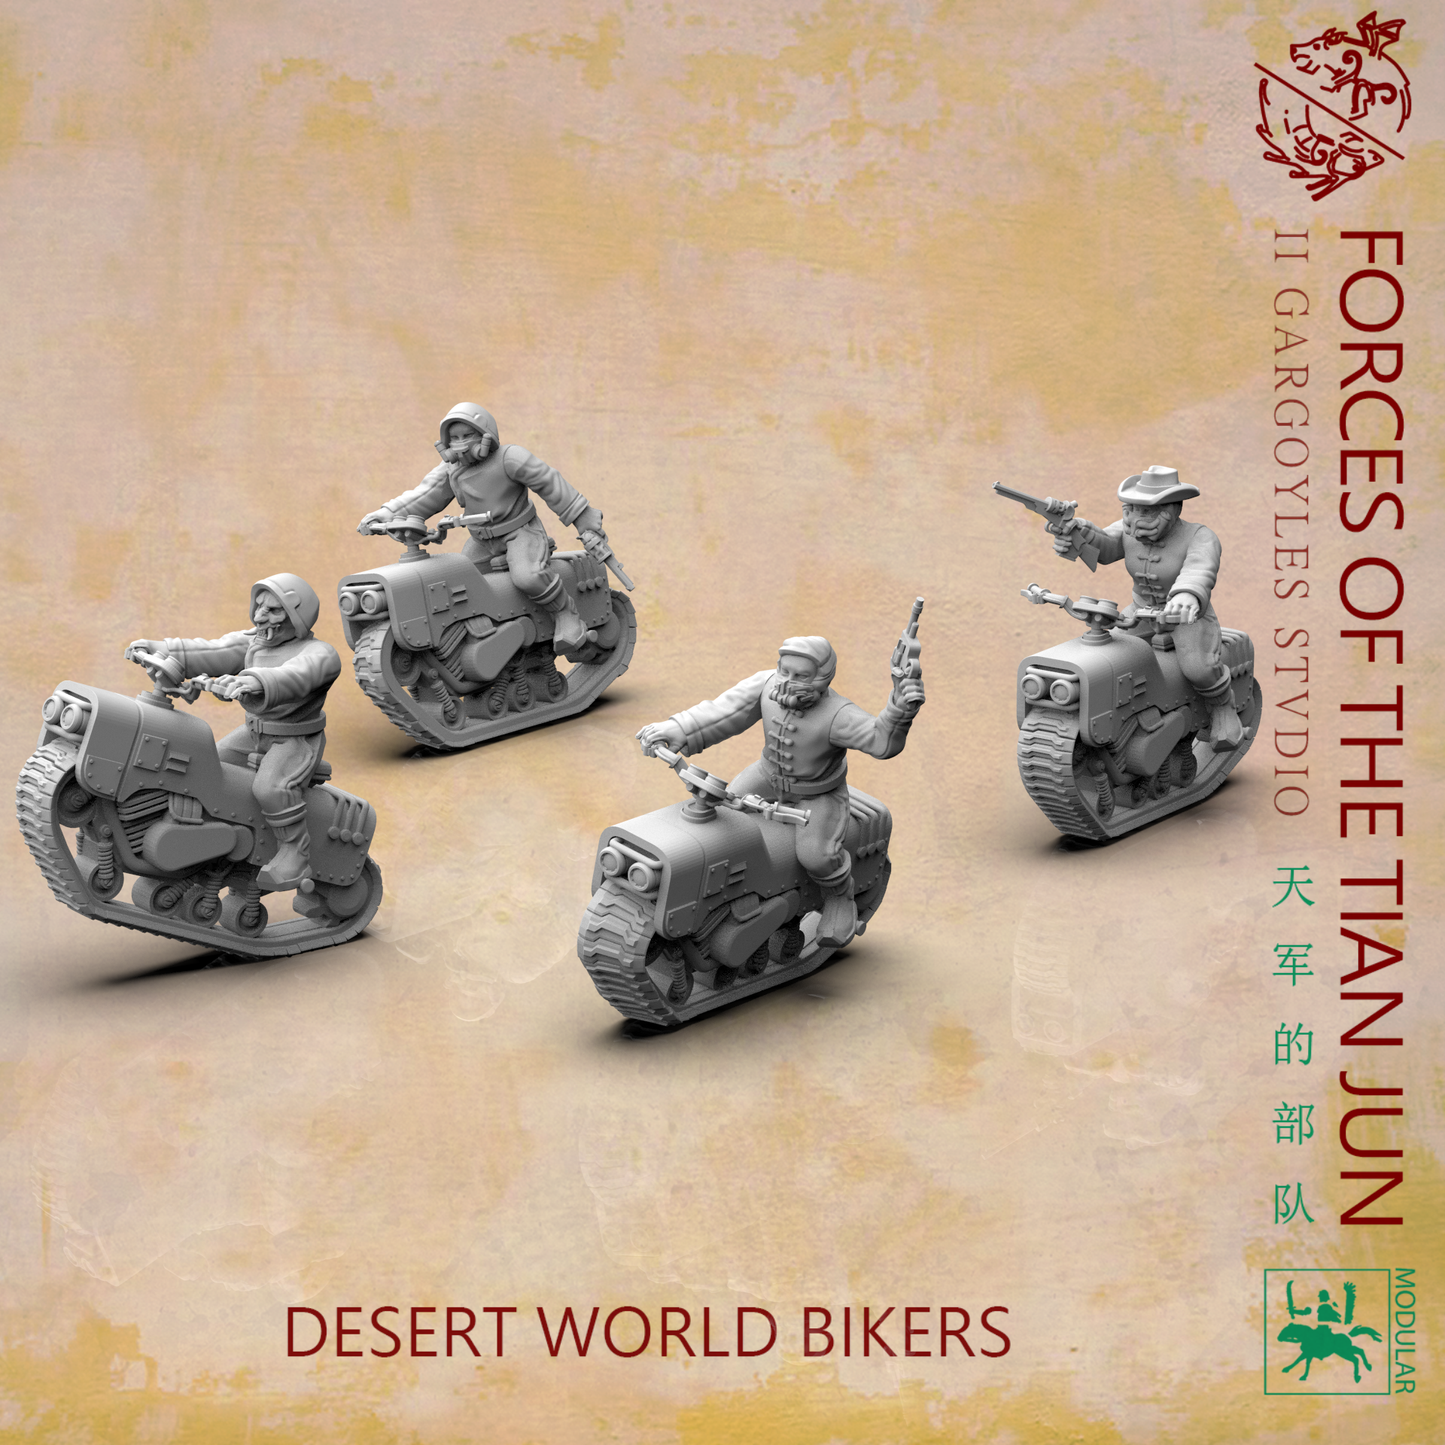 Desert World Bikers - Forces of Tian Jun